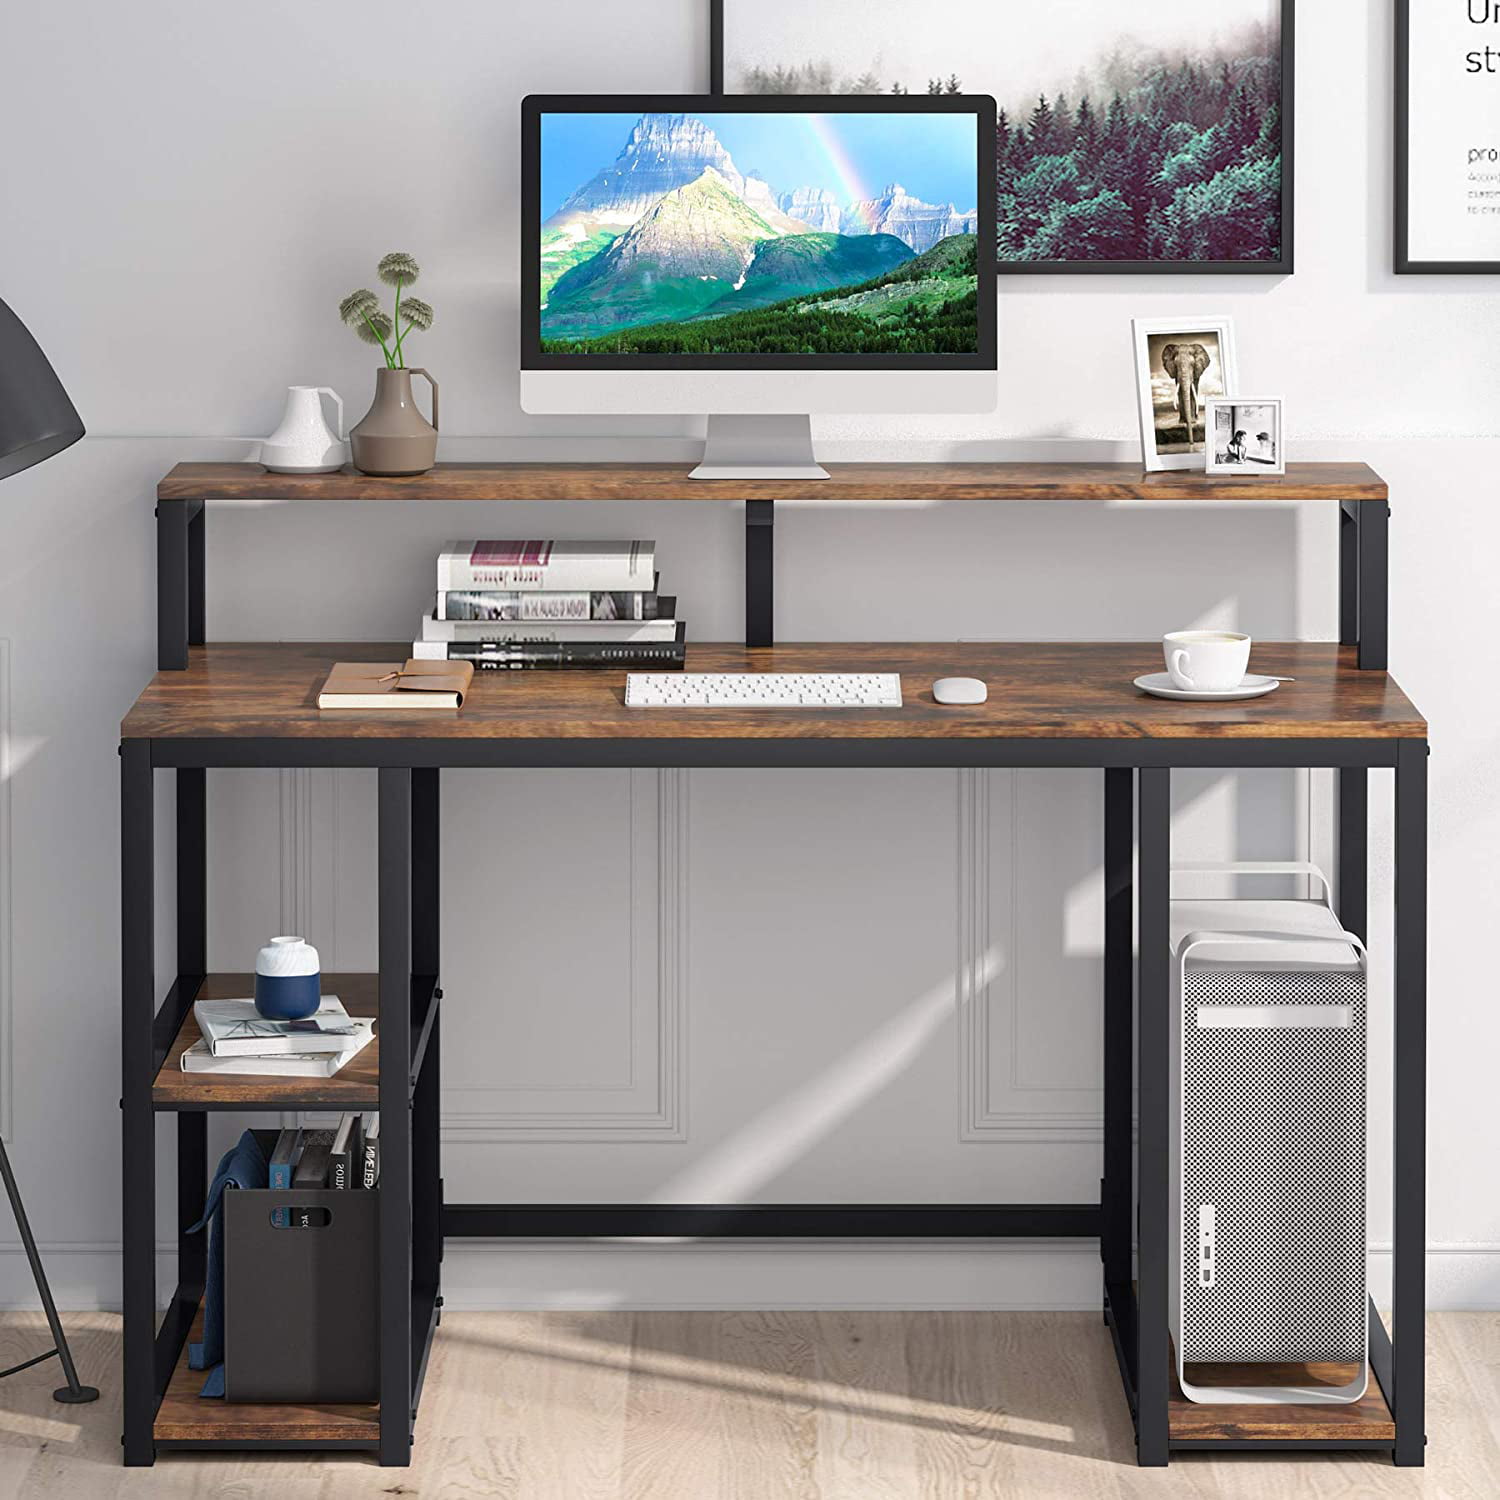 Gaming Desk Top QualityMulti Function Charging Station 32”TVStand Speaker, 